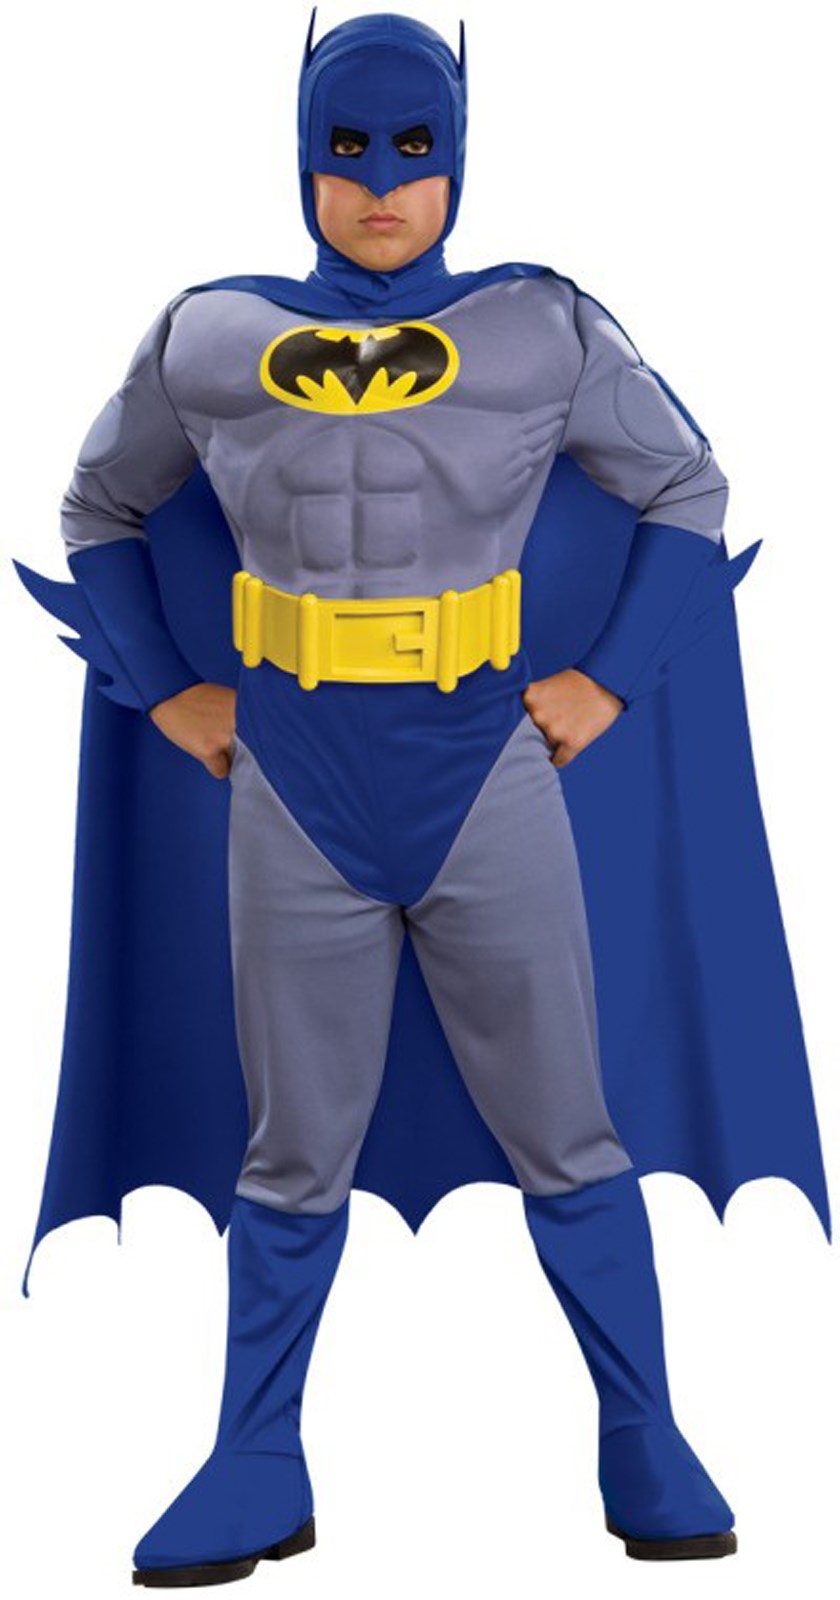 Batman Brave & Bold Deluxe M/C Batman Toddler / Child Costume